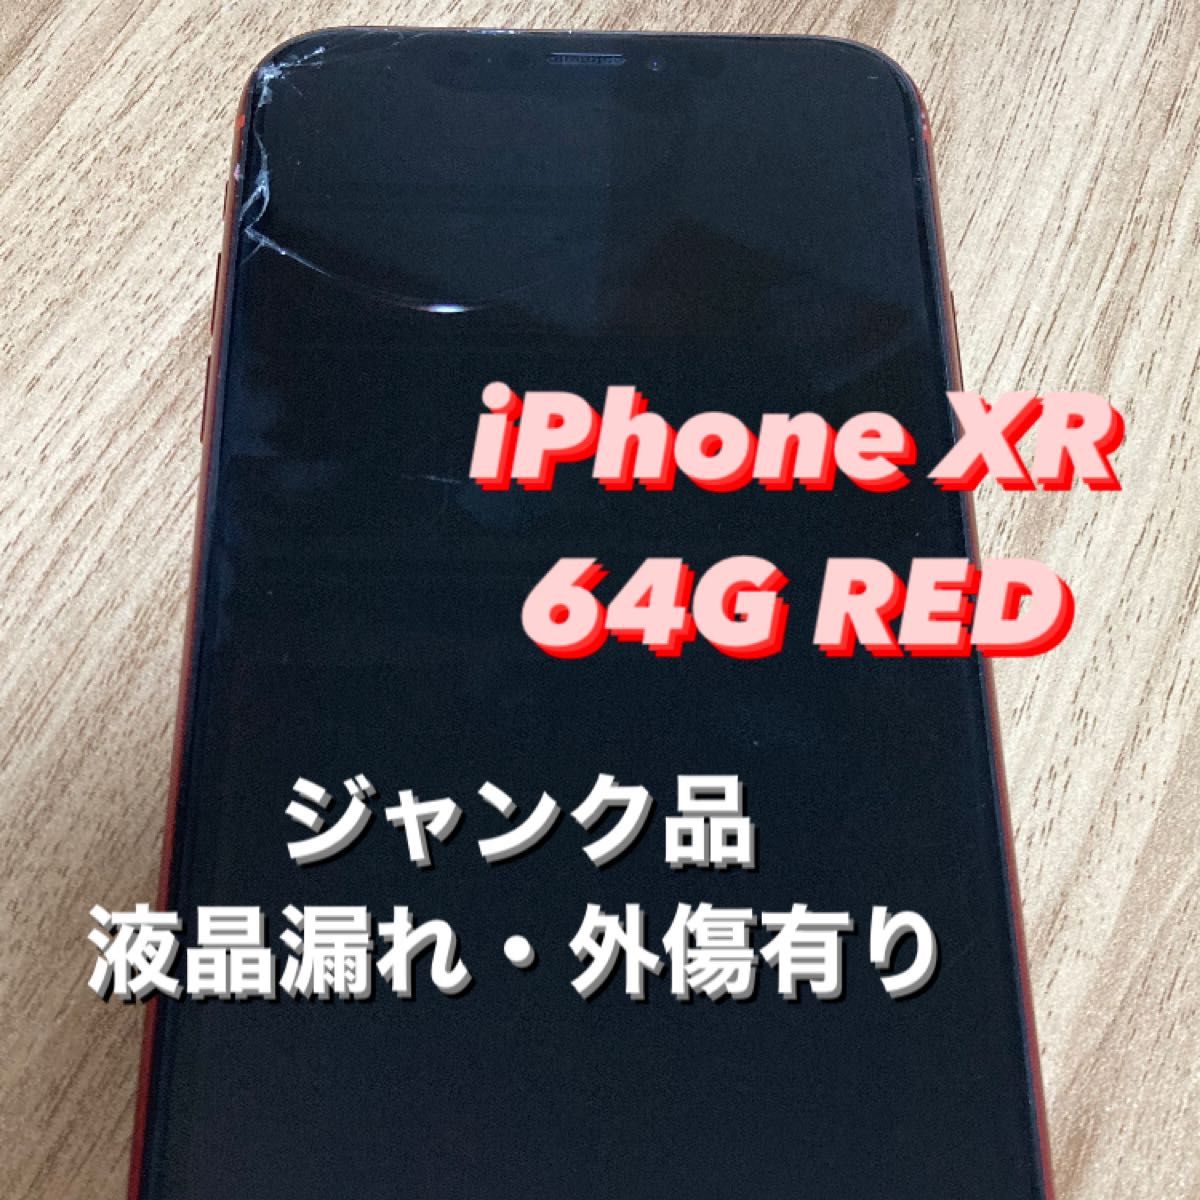 iPhone XR RED 64 GB docomo ジャンク品